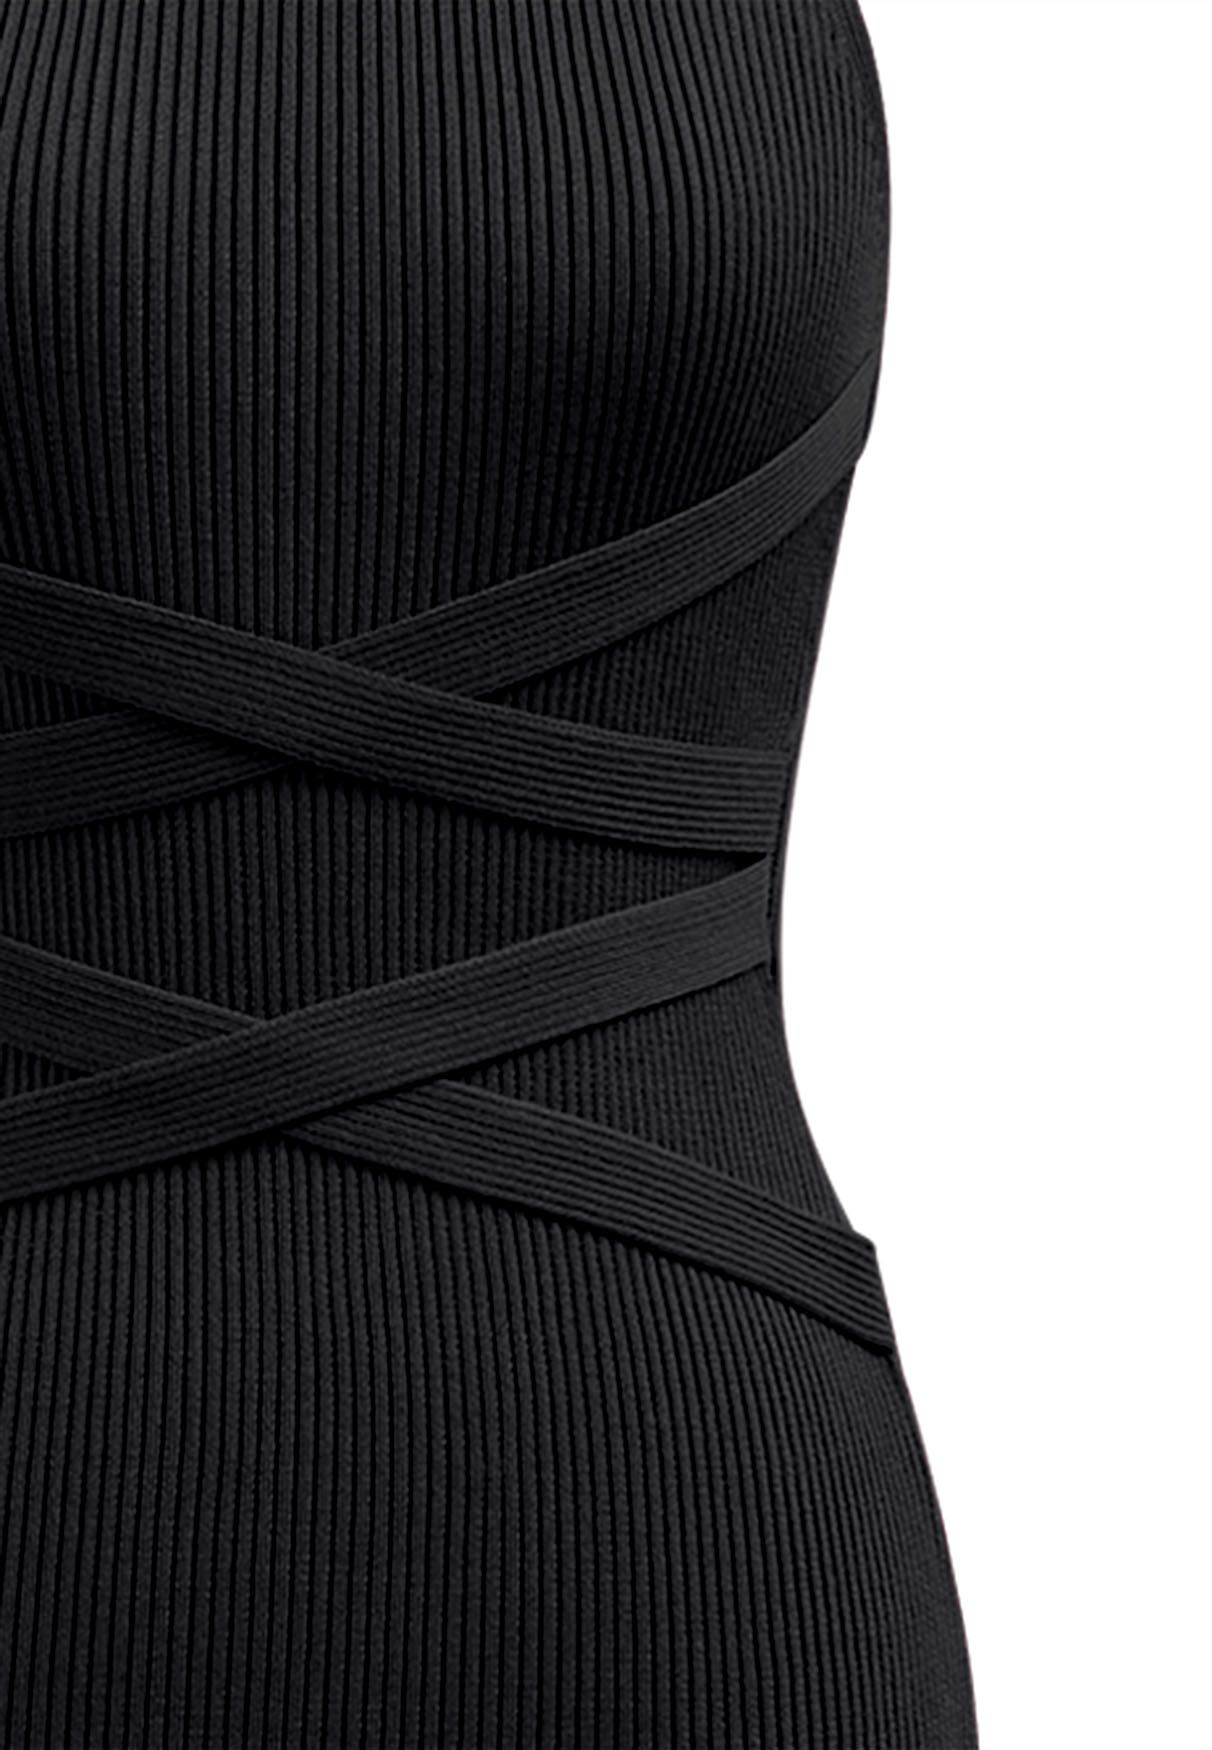 Criss Cross Waist Halter Knit Dress in Black